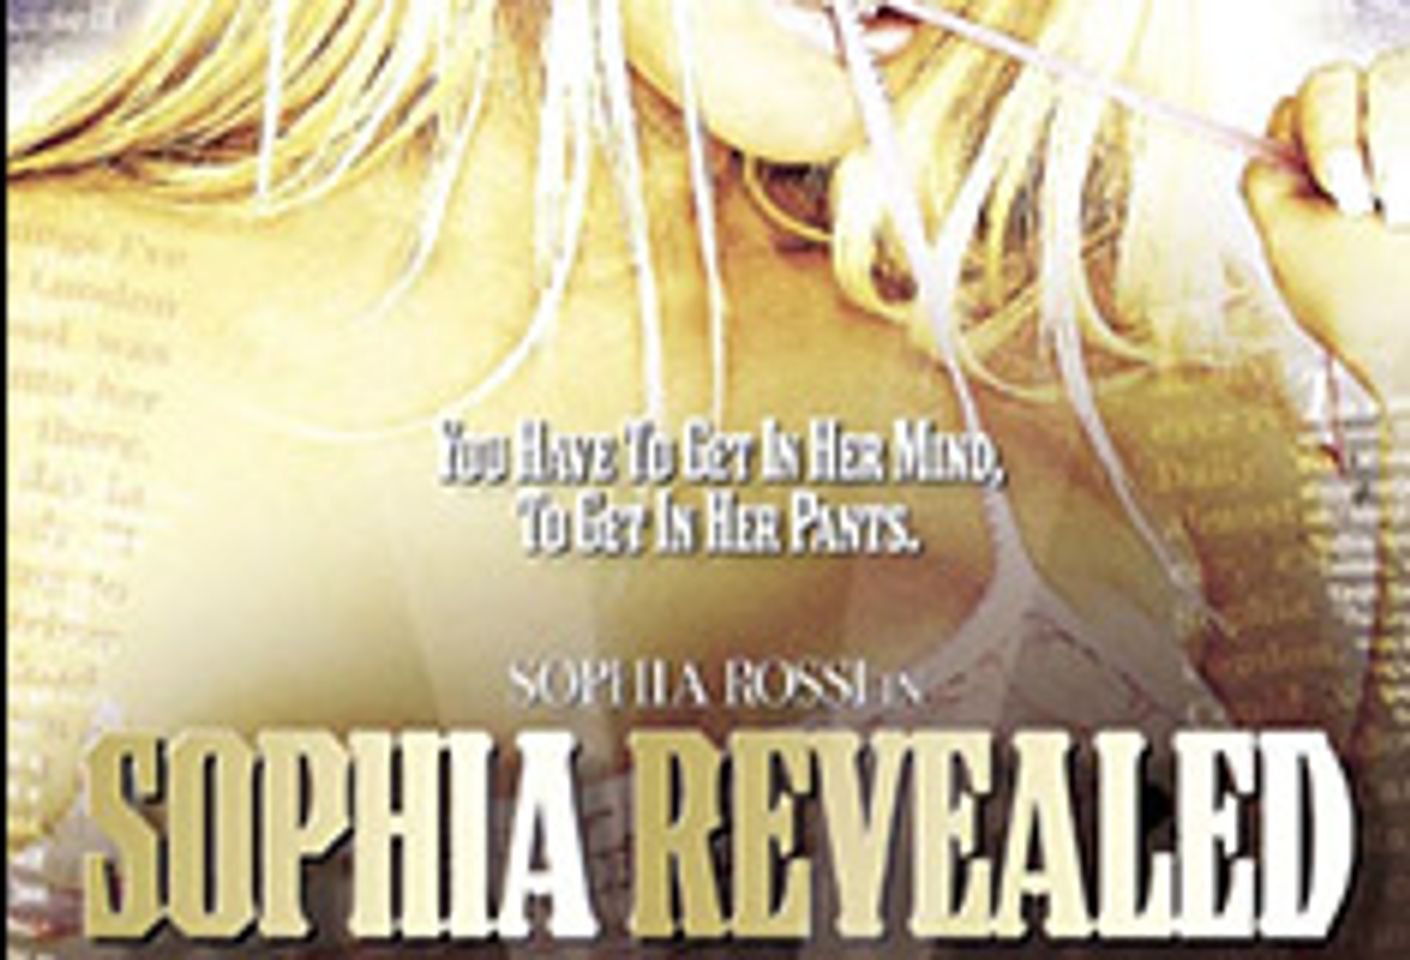 Club Jenna to Release <i>Sophia Revealed</i>